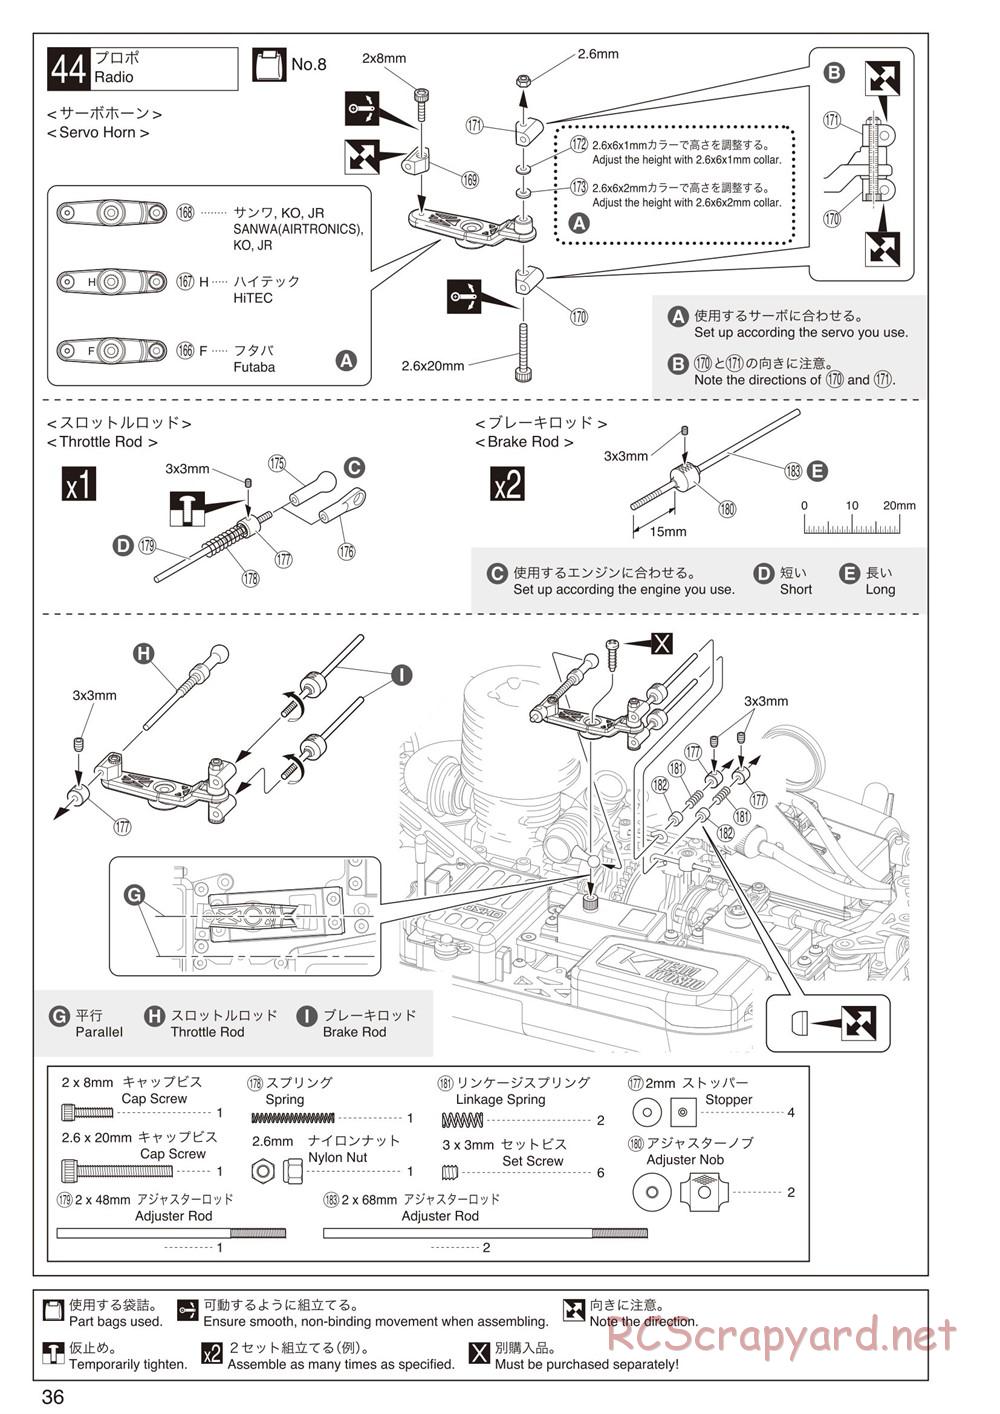 Kyosho - Inferno MP9 TKI4 - Manual - Page 36